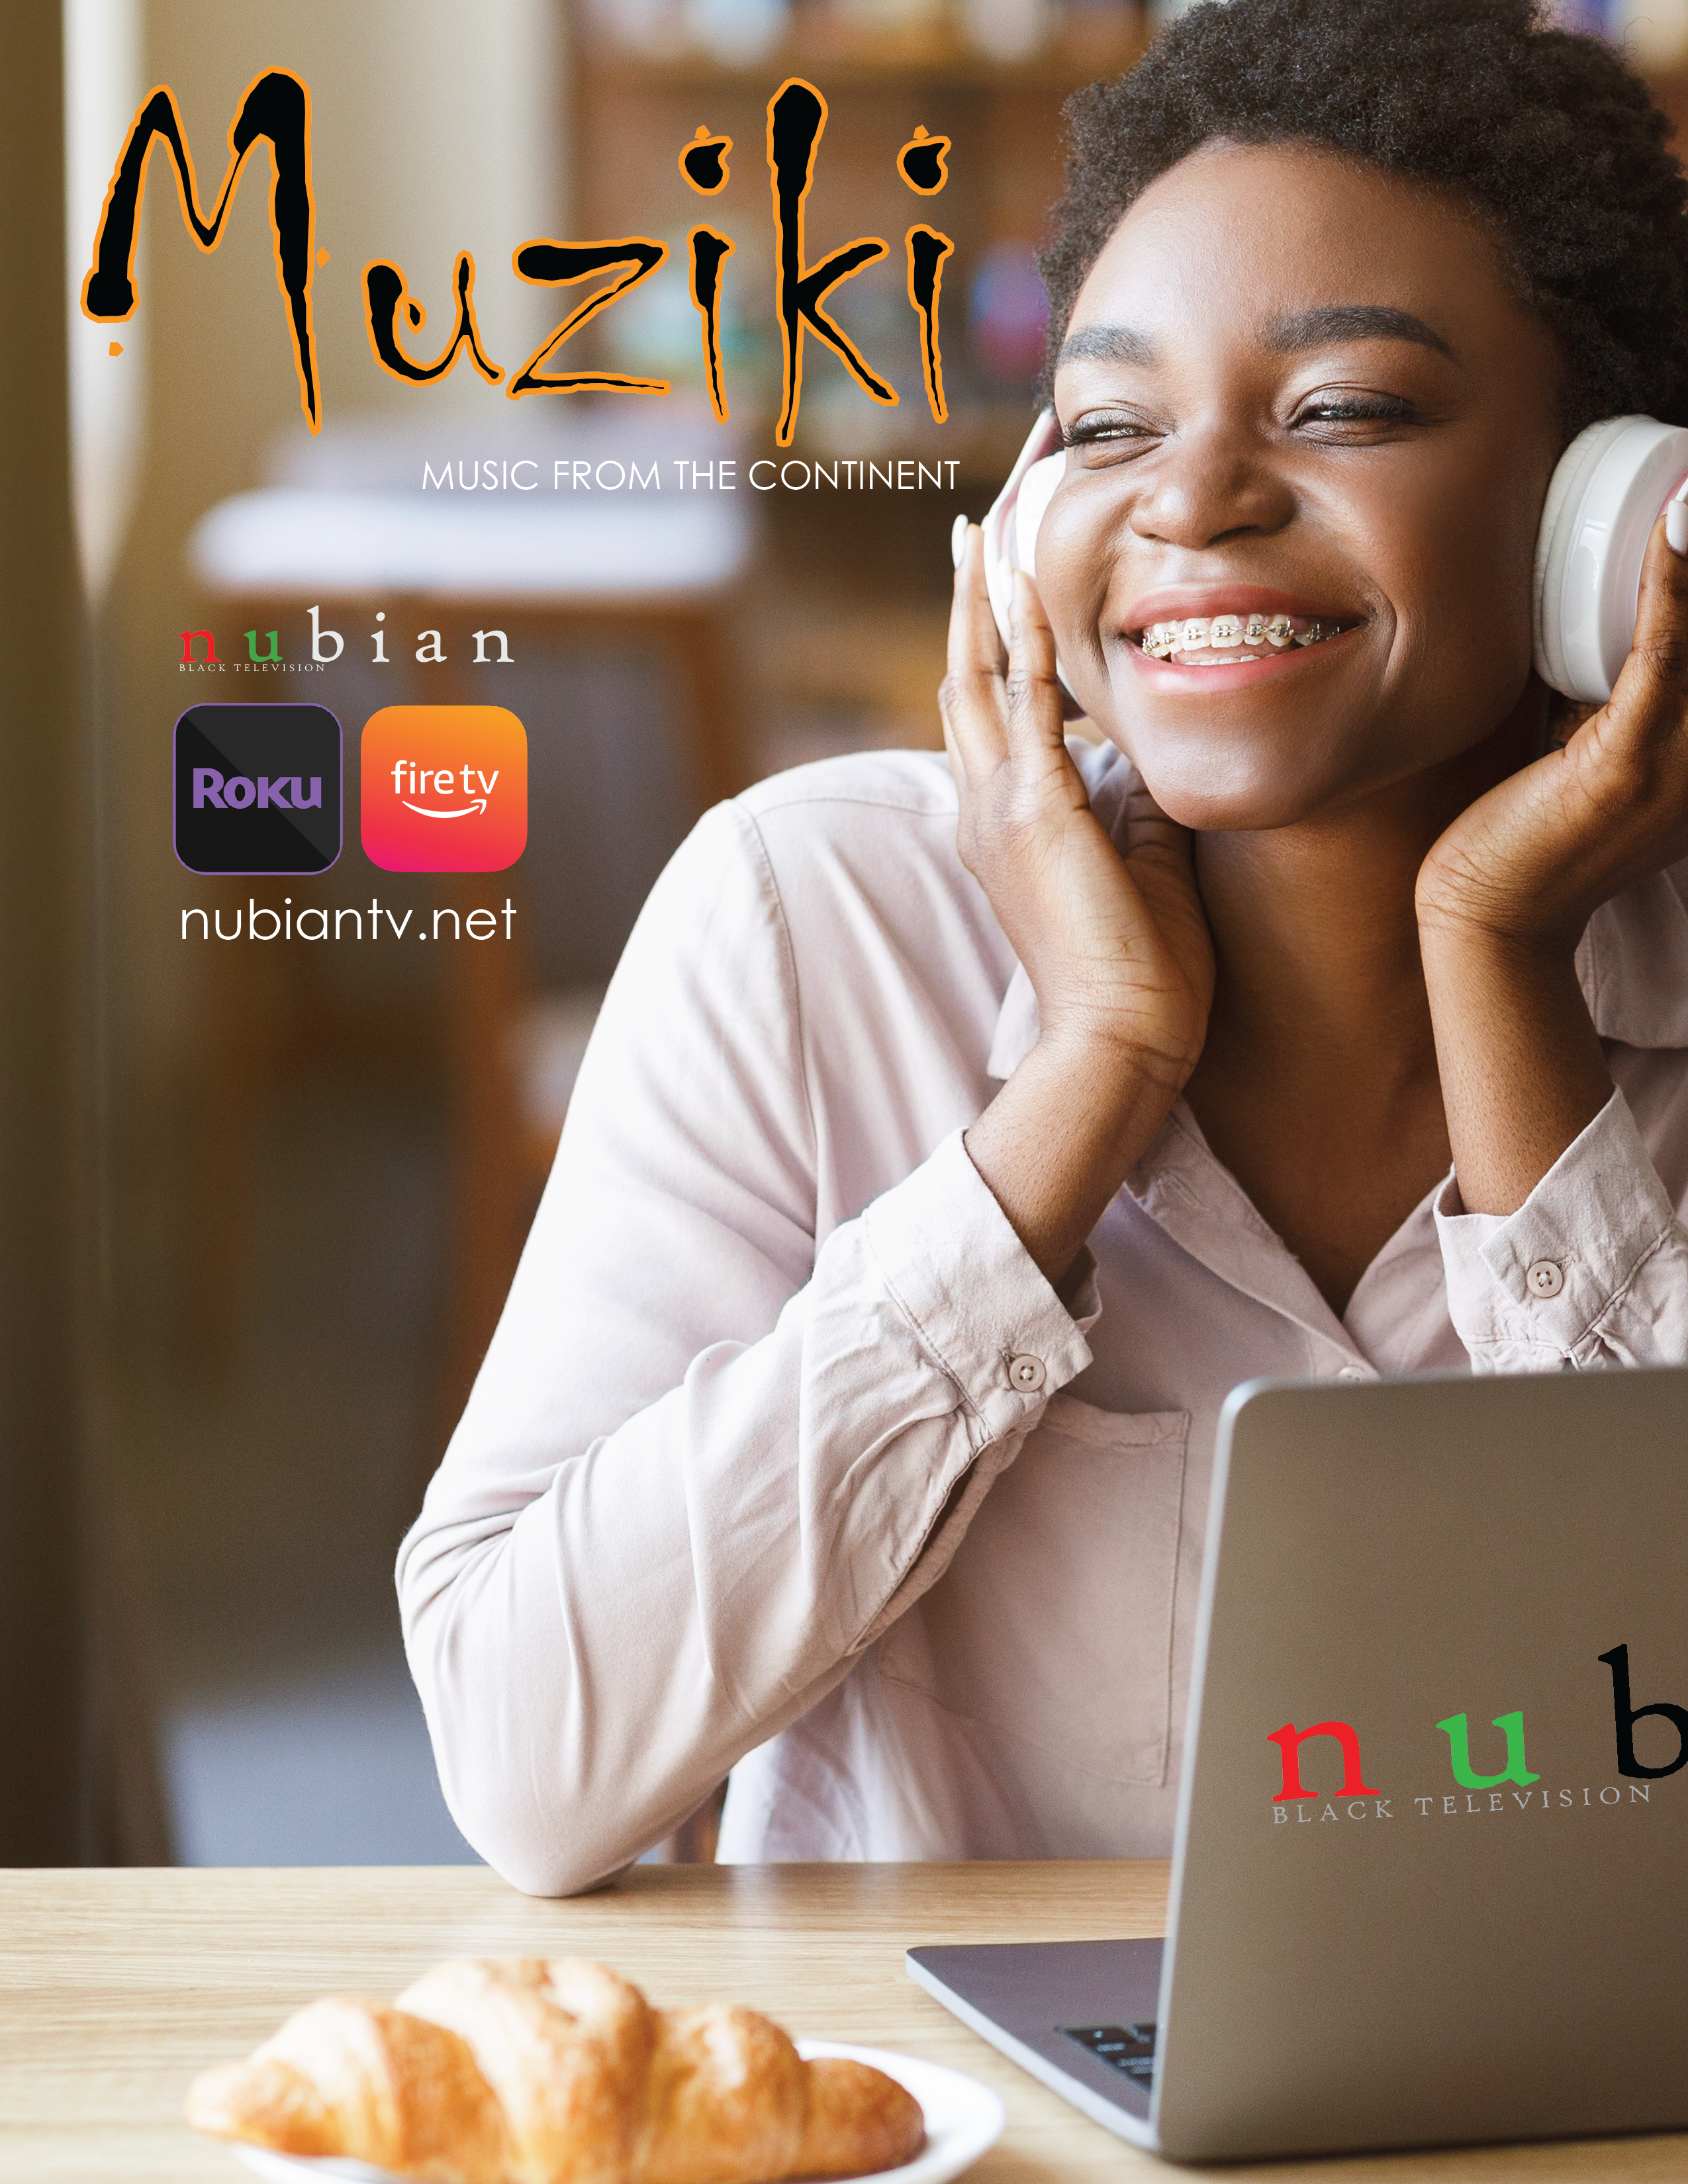 Muziki – Music from the continent